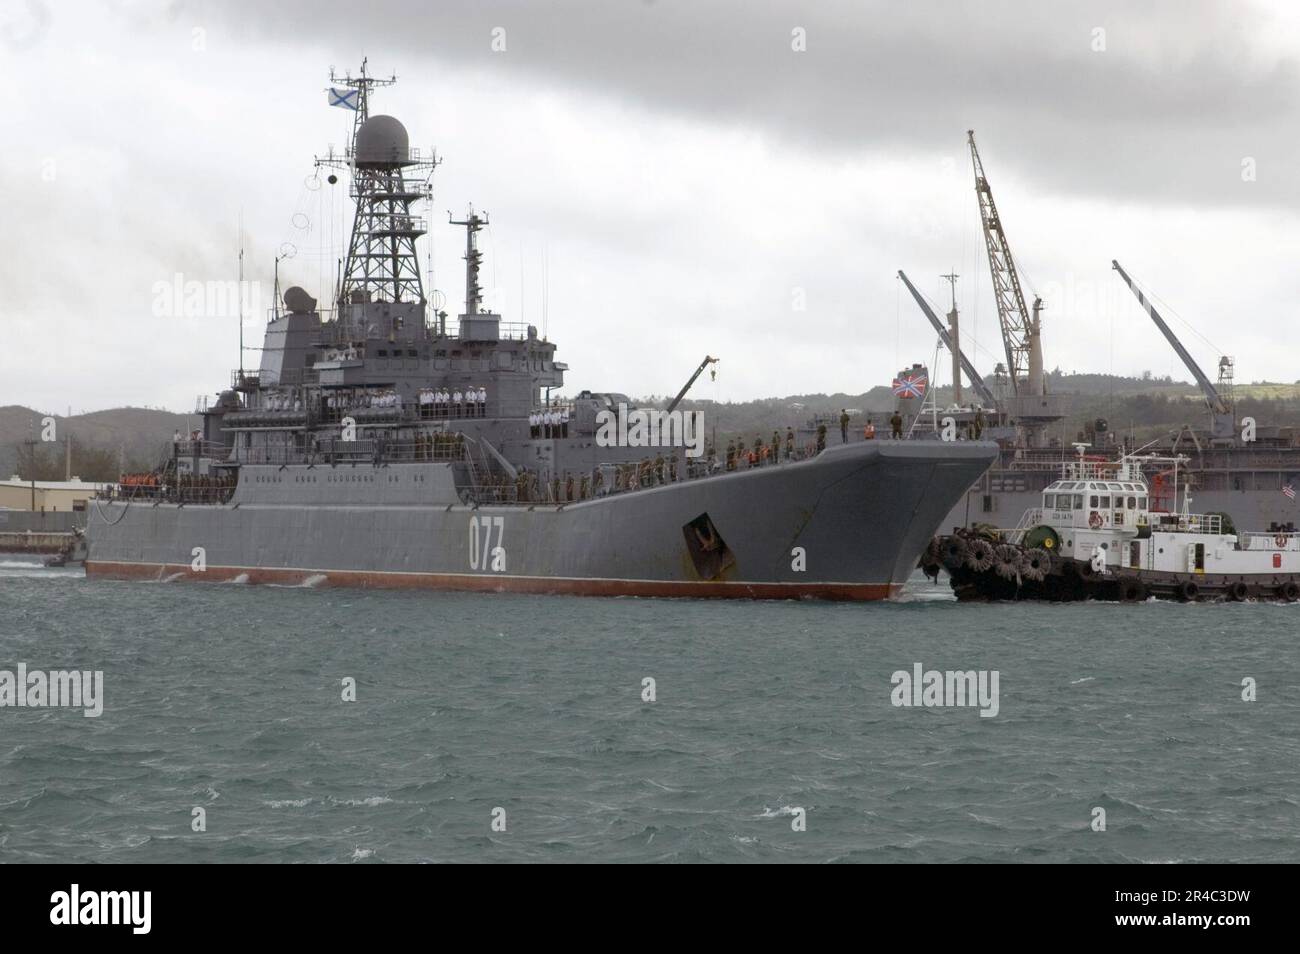 US Navy  The Russian Federated Navy (RFN) tank landing ship, BDK-11, prepares to moor at Apra Harbor. Stock Photo